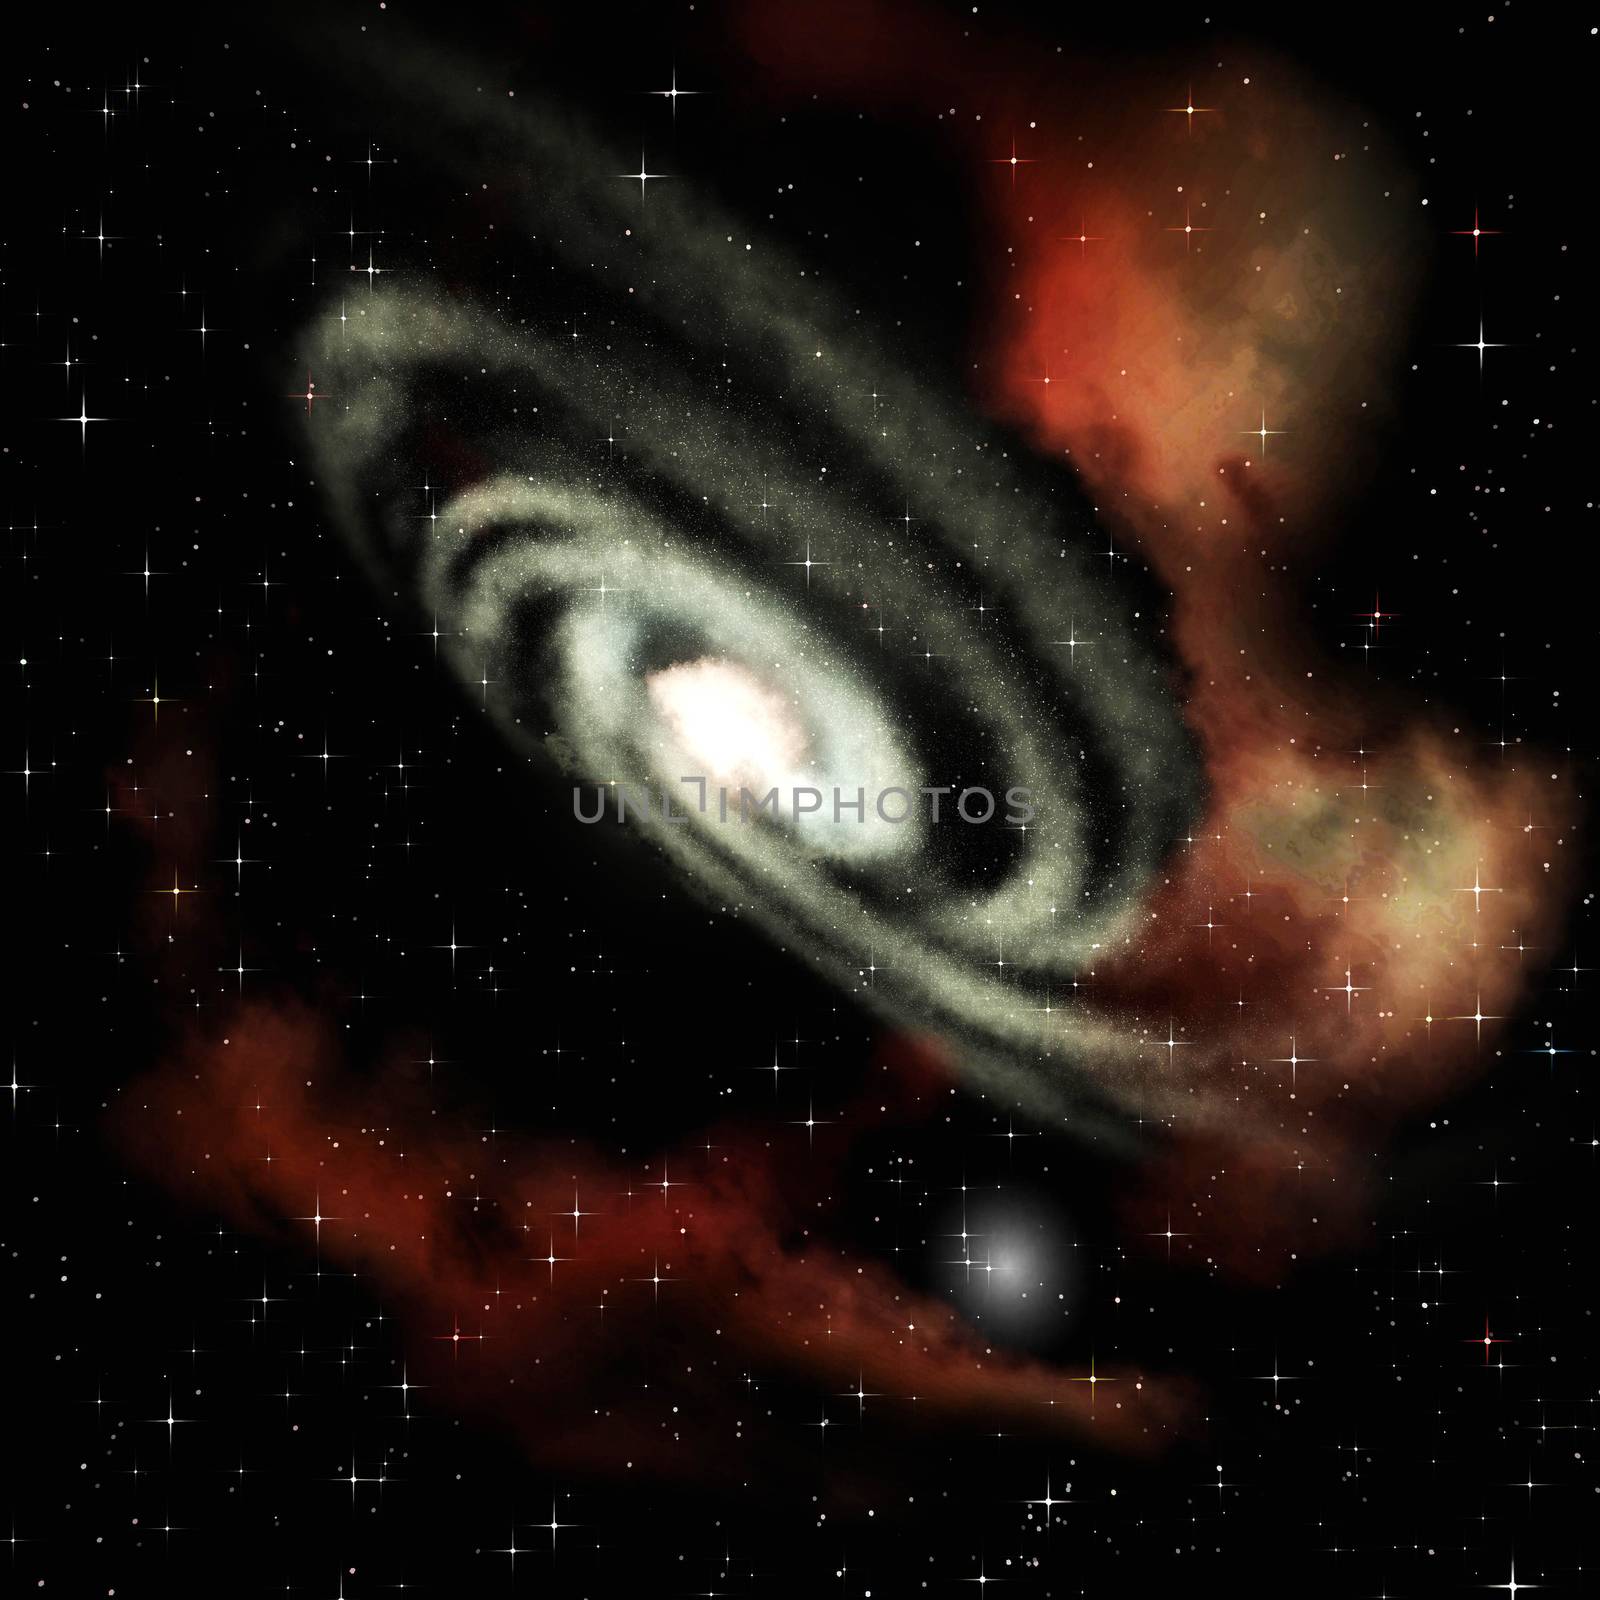 Digital Illustration of a Space Scene